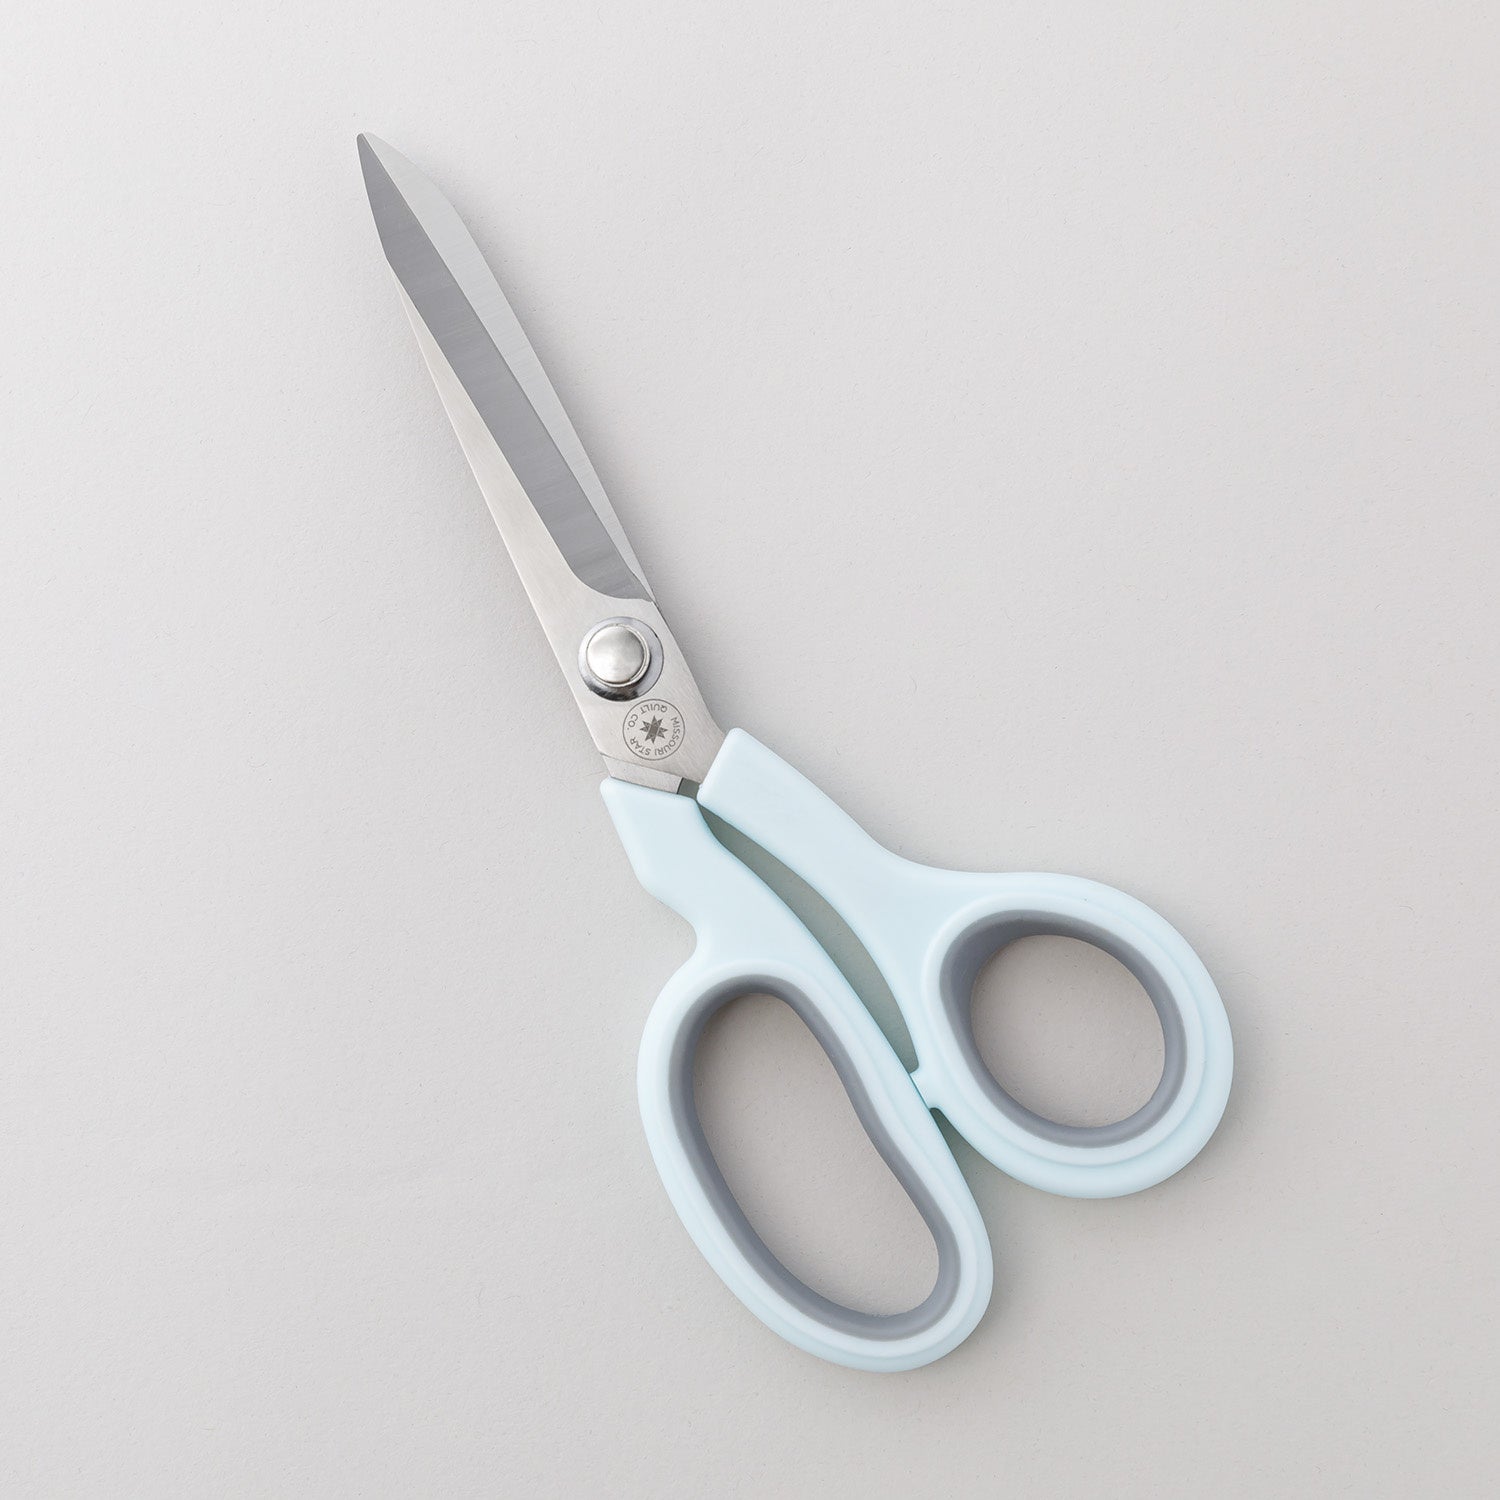 Stainless Steel Scissors Sharp Sewing Scissors Prym Love 